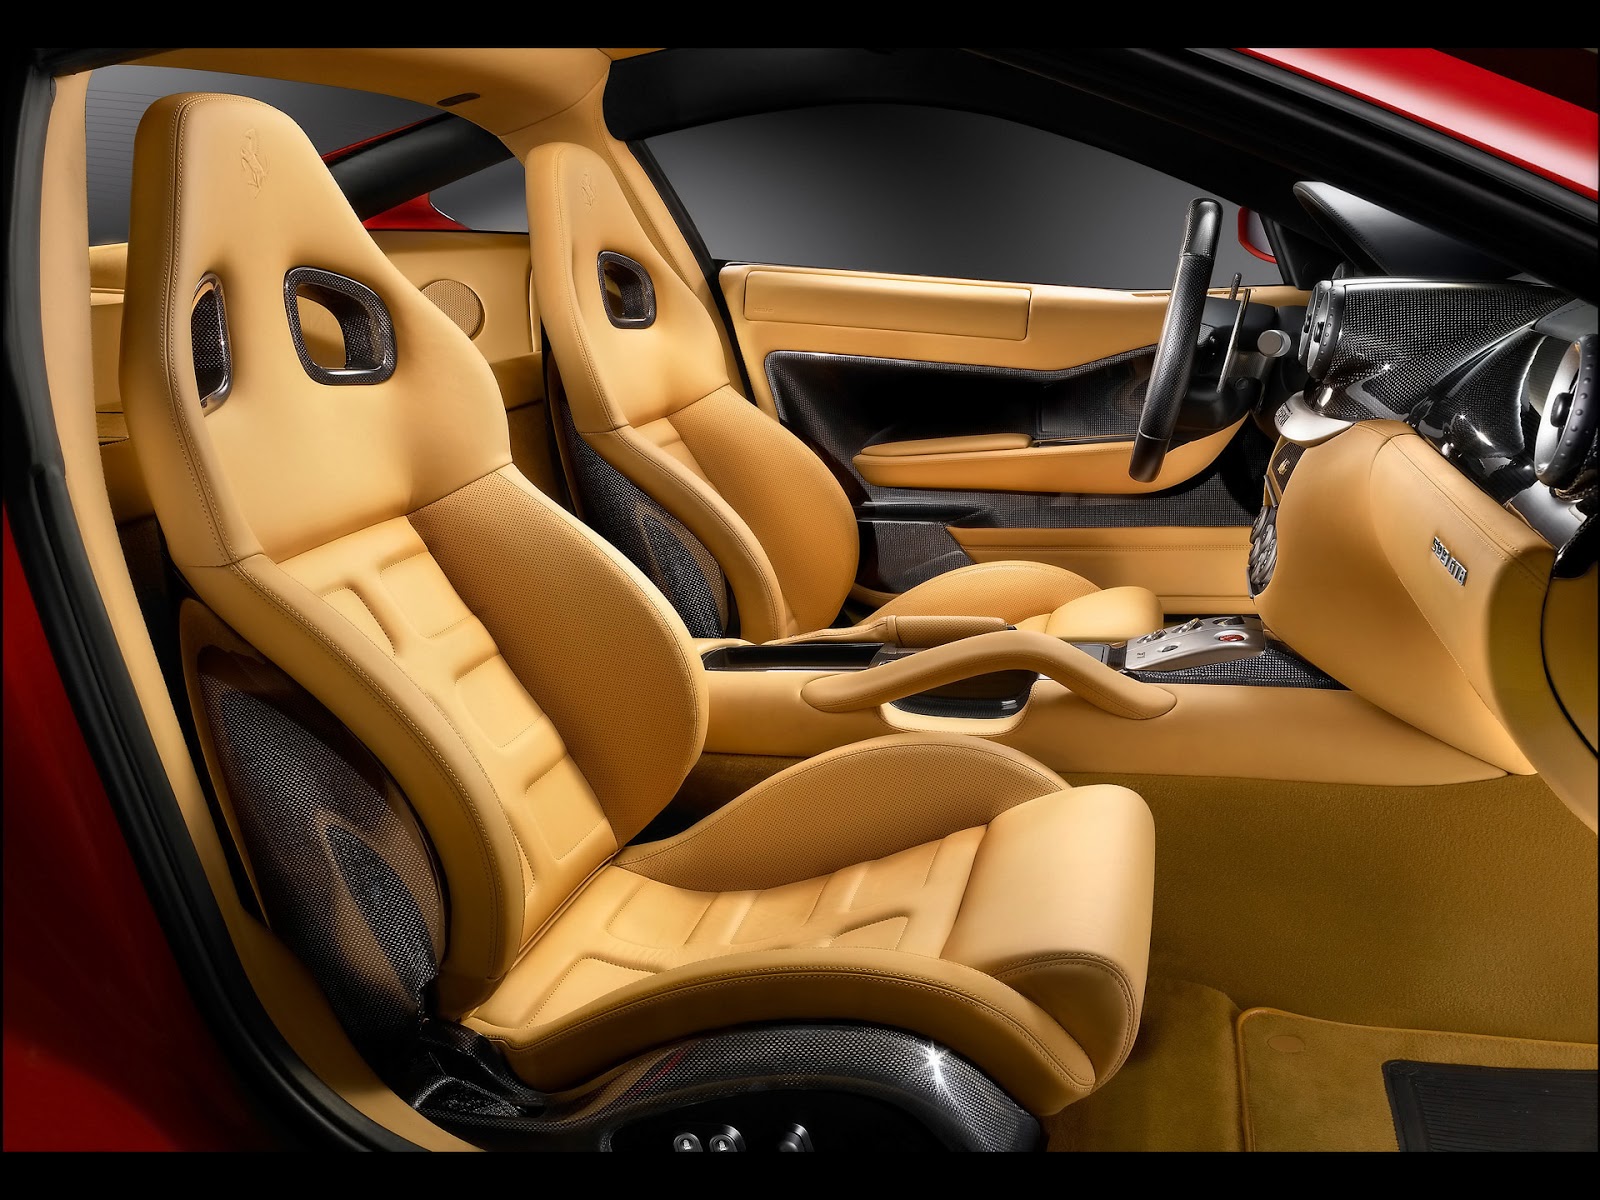 2006-Ferrari-599-GTB-Interior-1920x1440.jpg